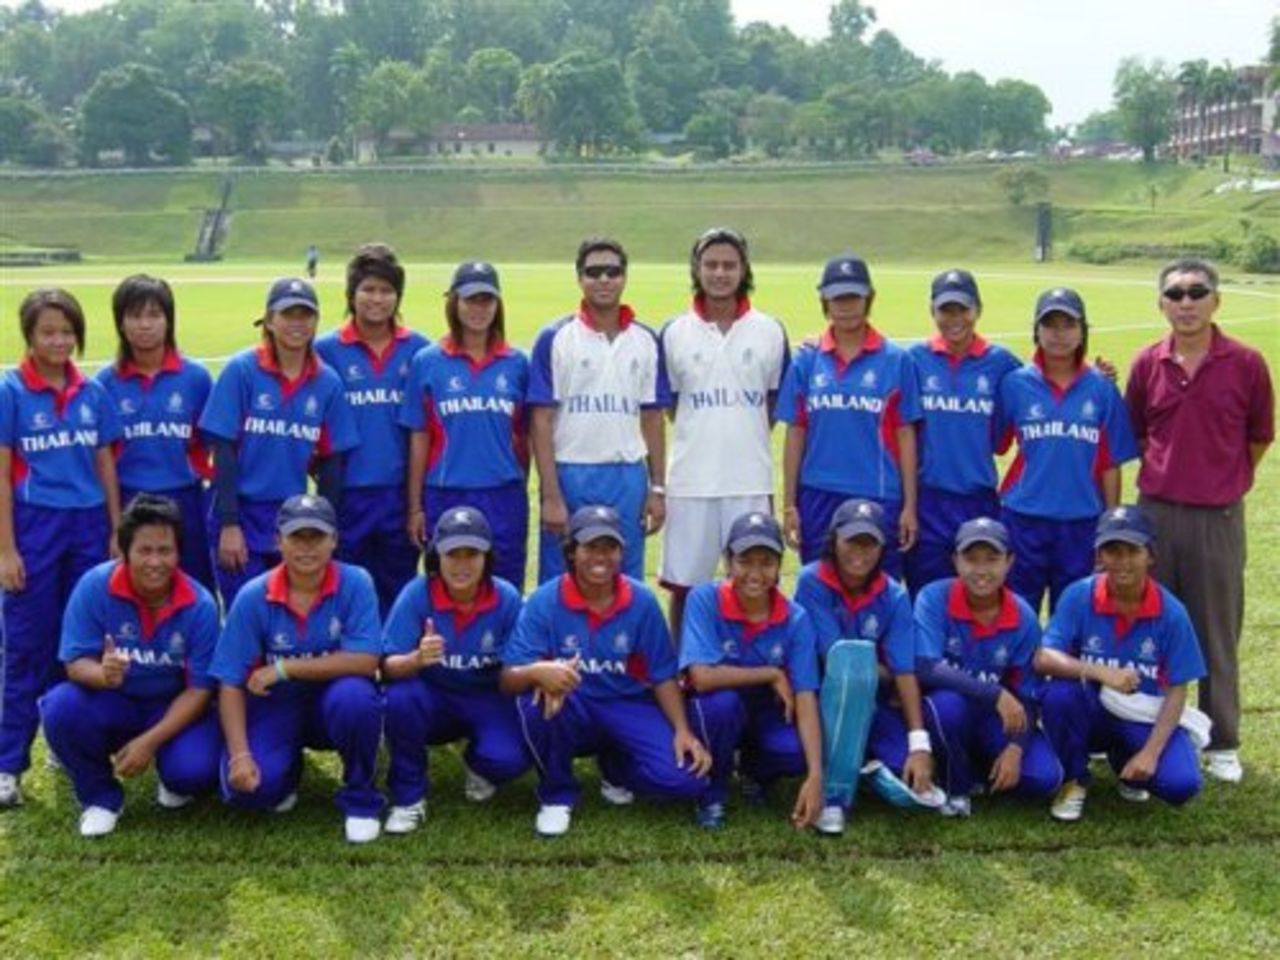 The Thailand Women's team pose for a photograph before their match against Nepal, Thailand Women v Nepal Women, ACC Women's tournament, Johar, July 12, 2007 